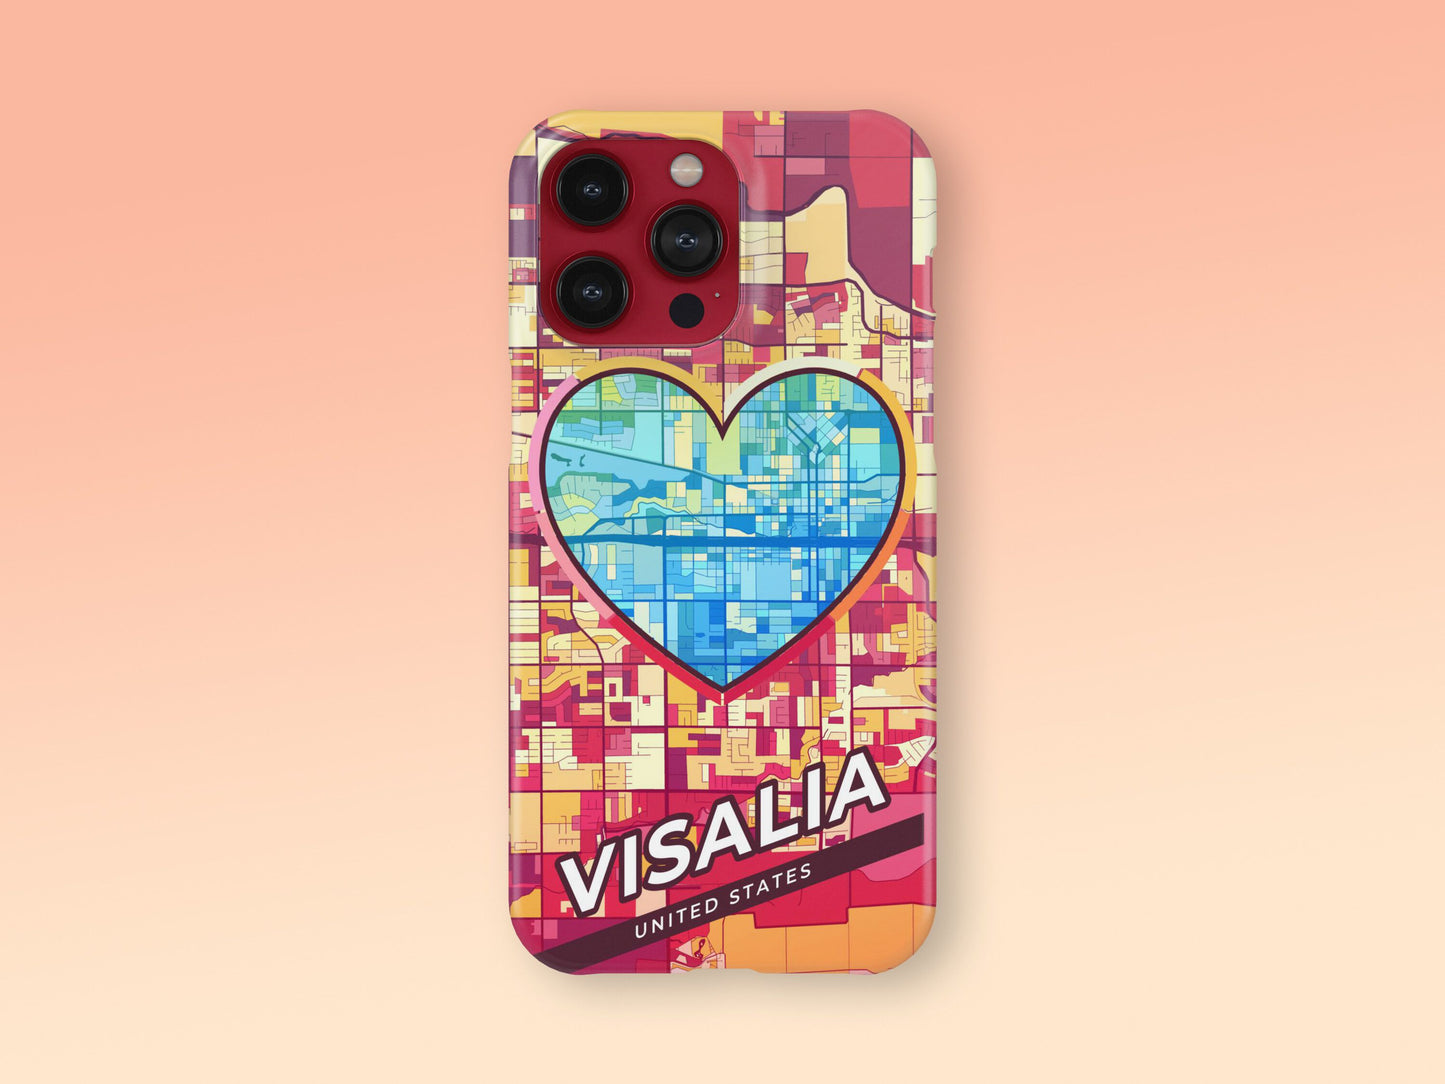 Visalia California slim phone case with colorful icon 2